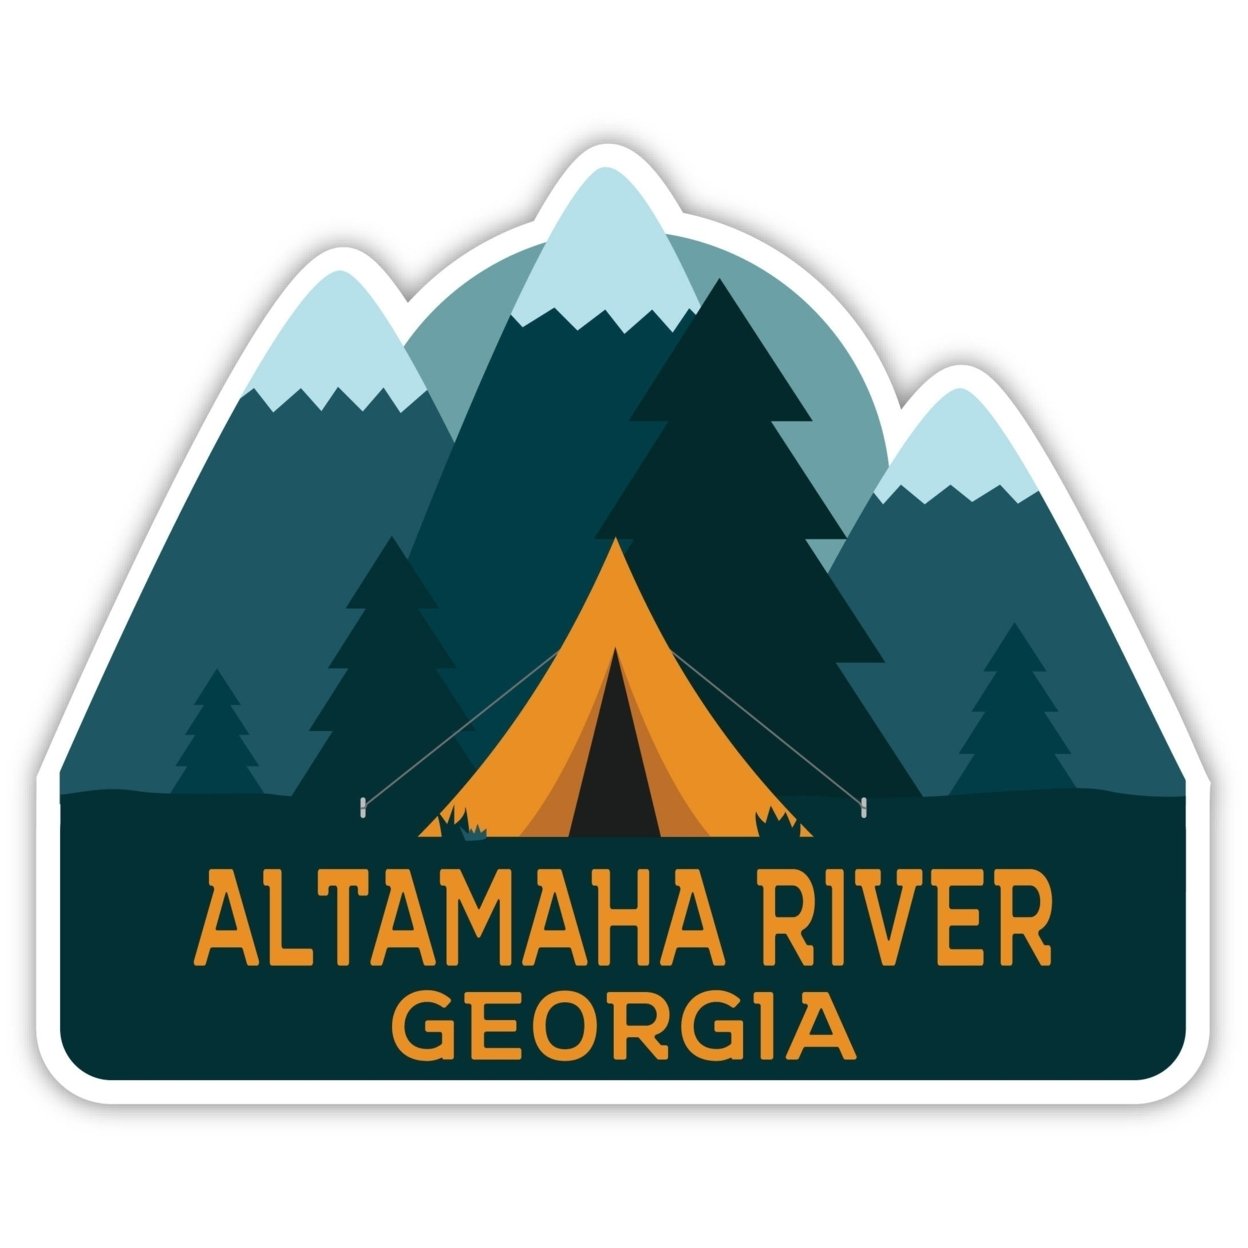 Altamaha River Georgia Souvenir Decorative Stickers (Choose Theme And Size) - 4-Pack, 12-Inch, Tent